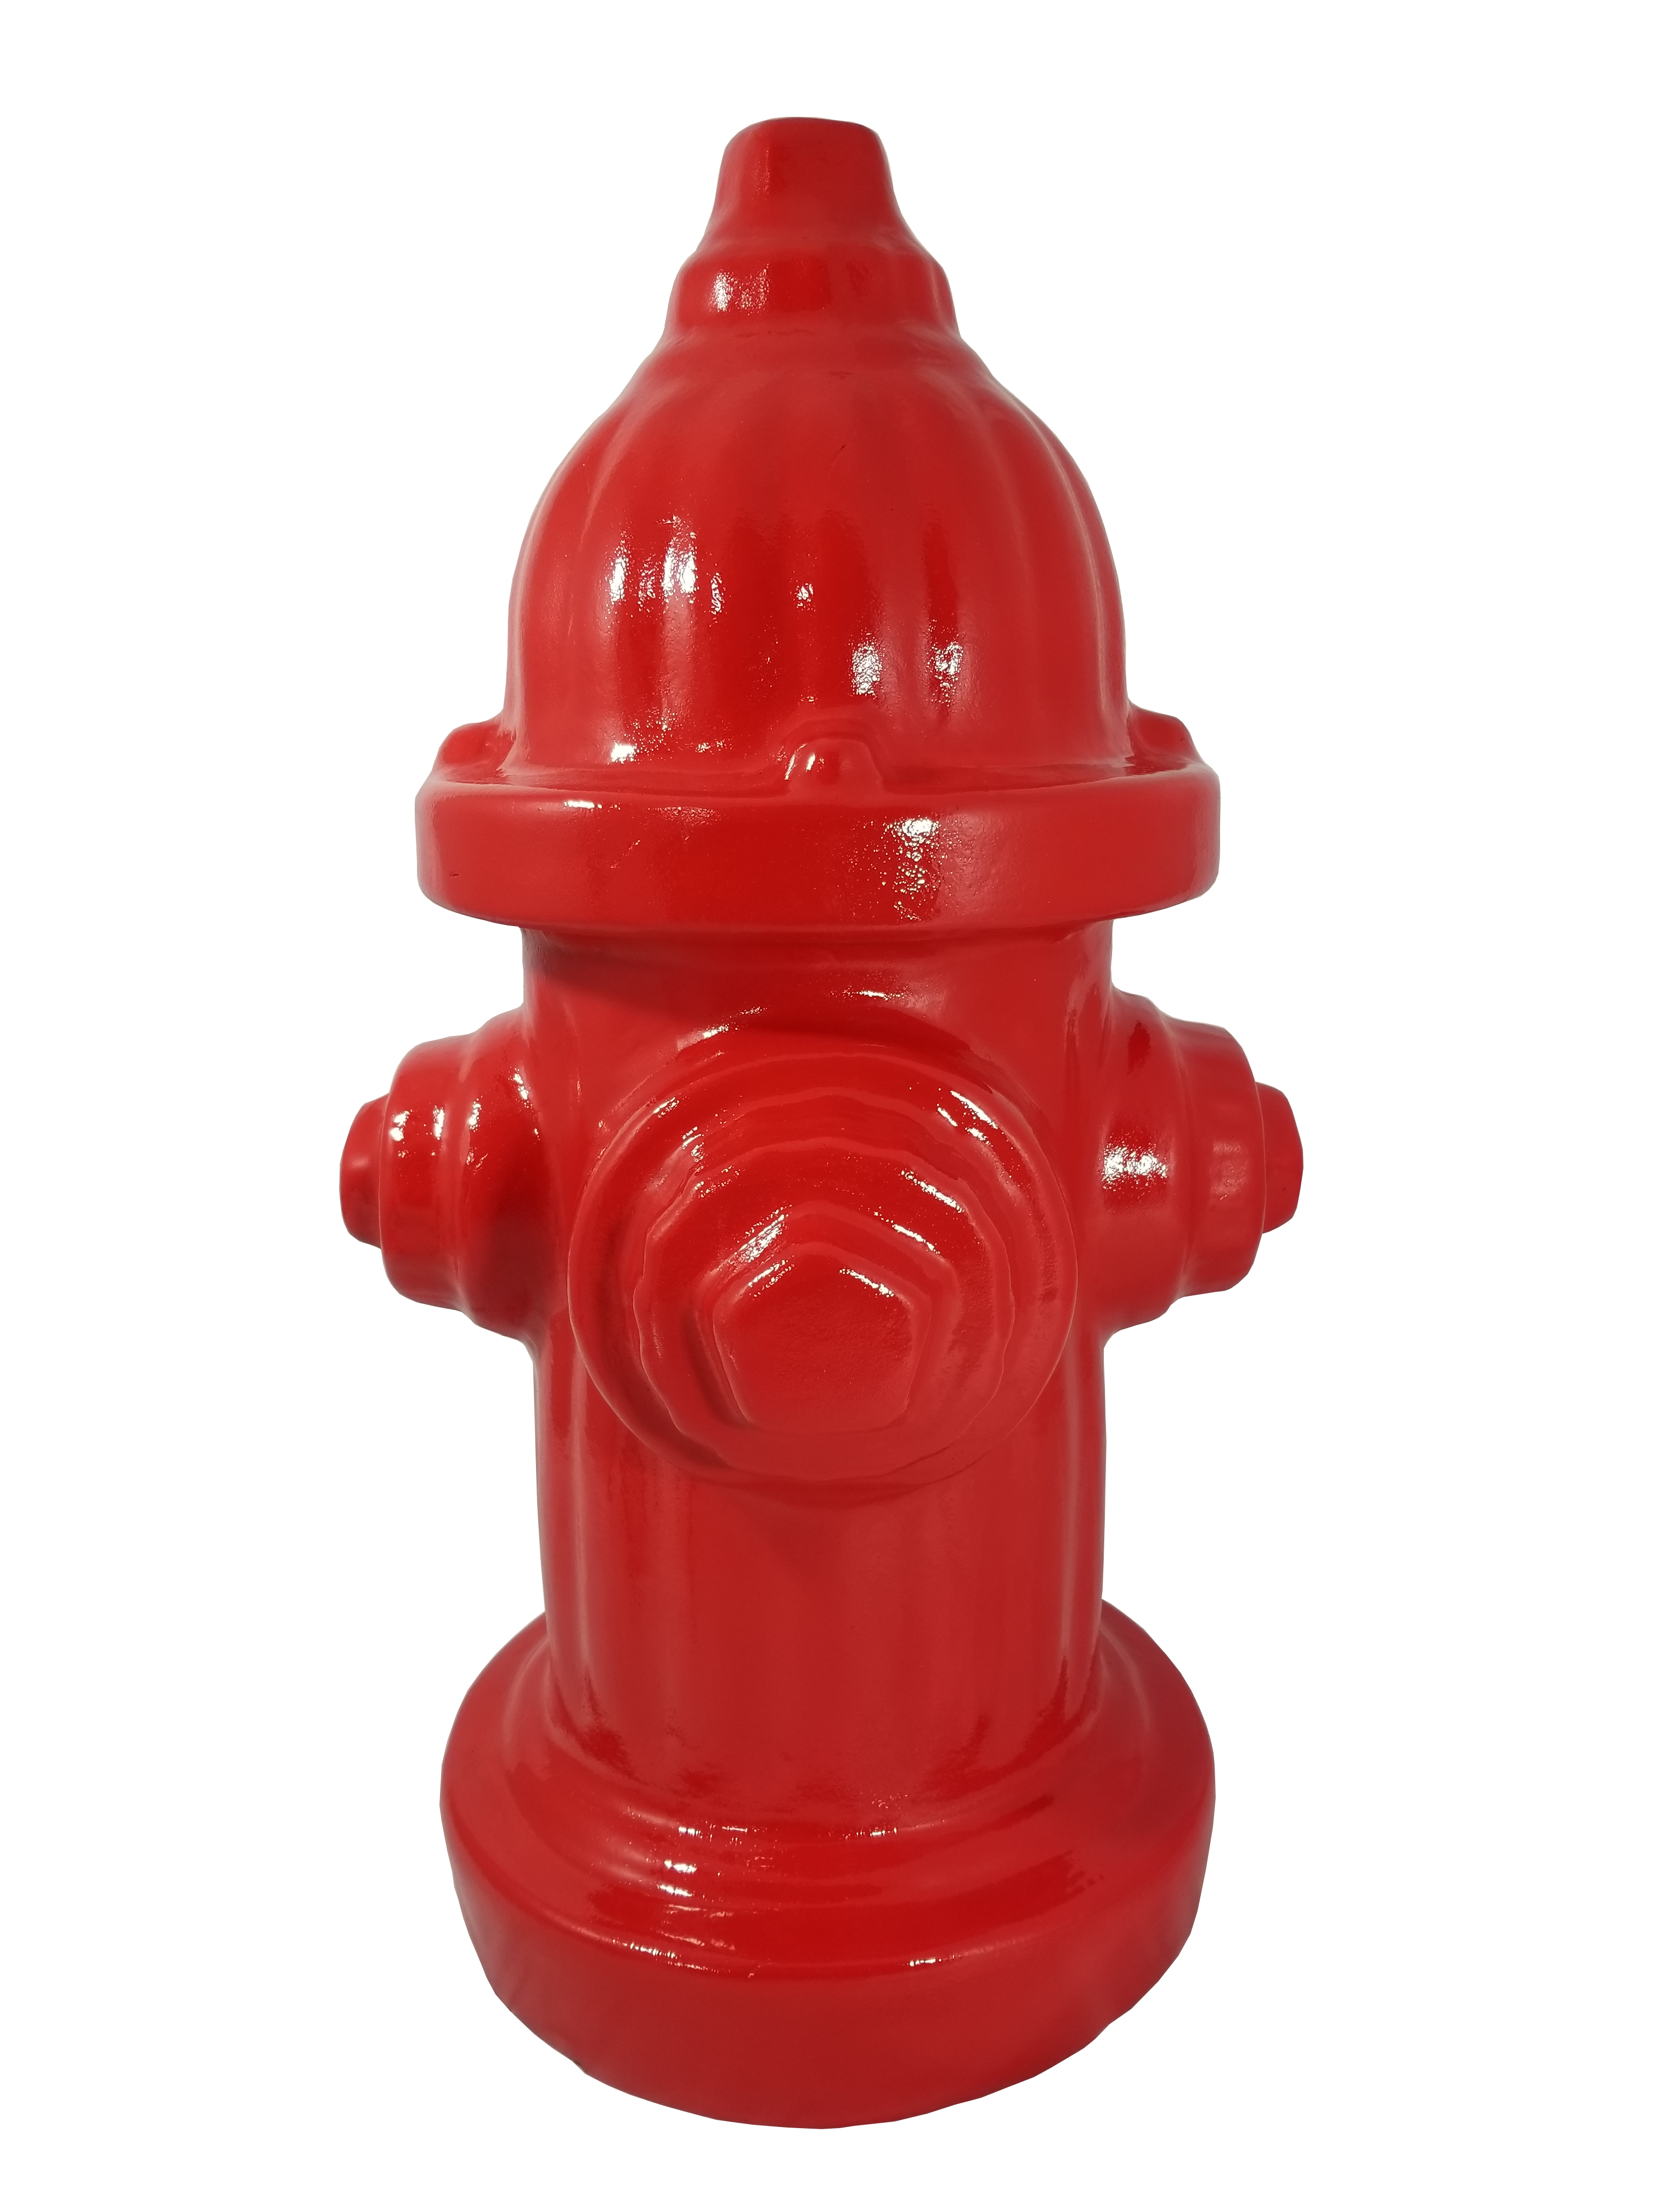 Feuerhydrant